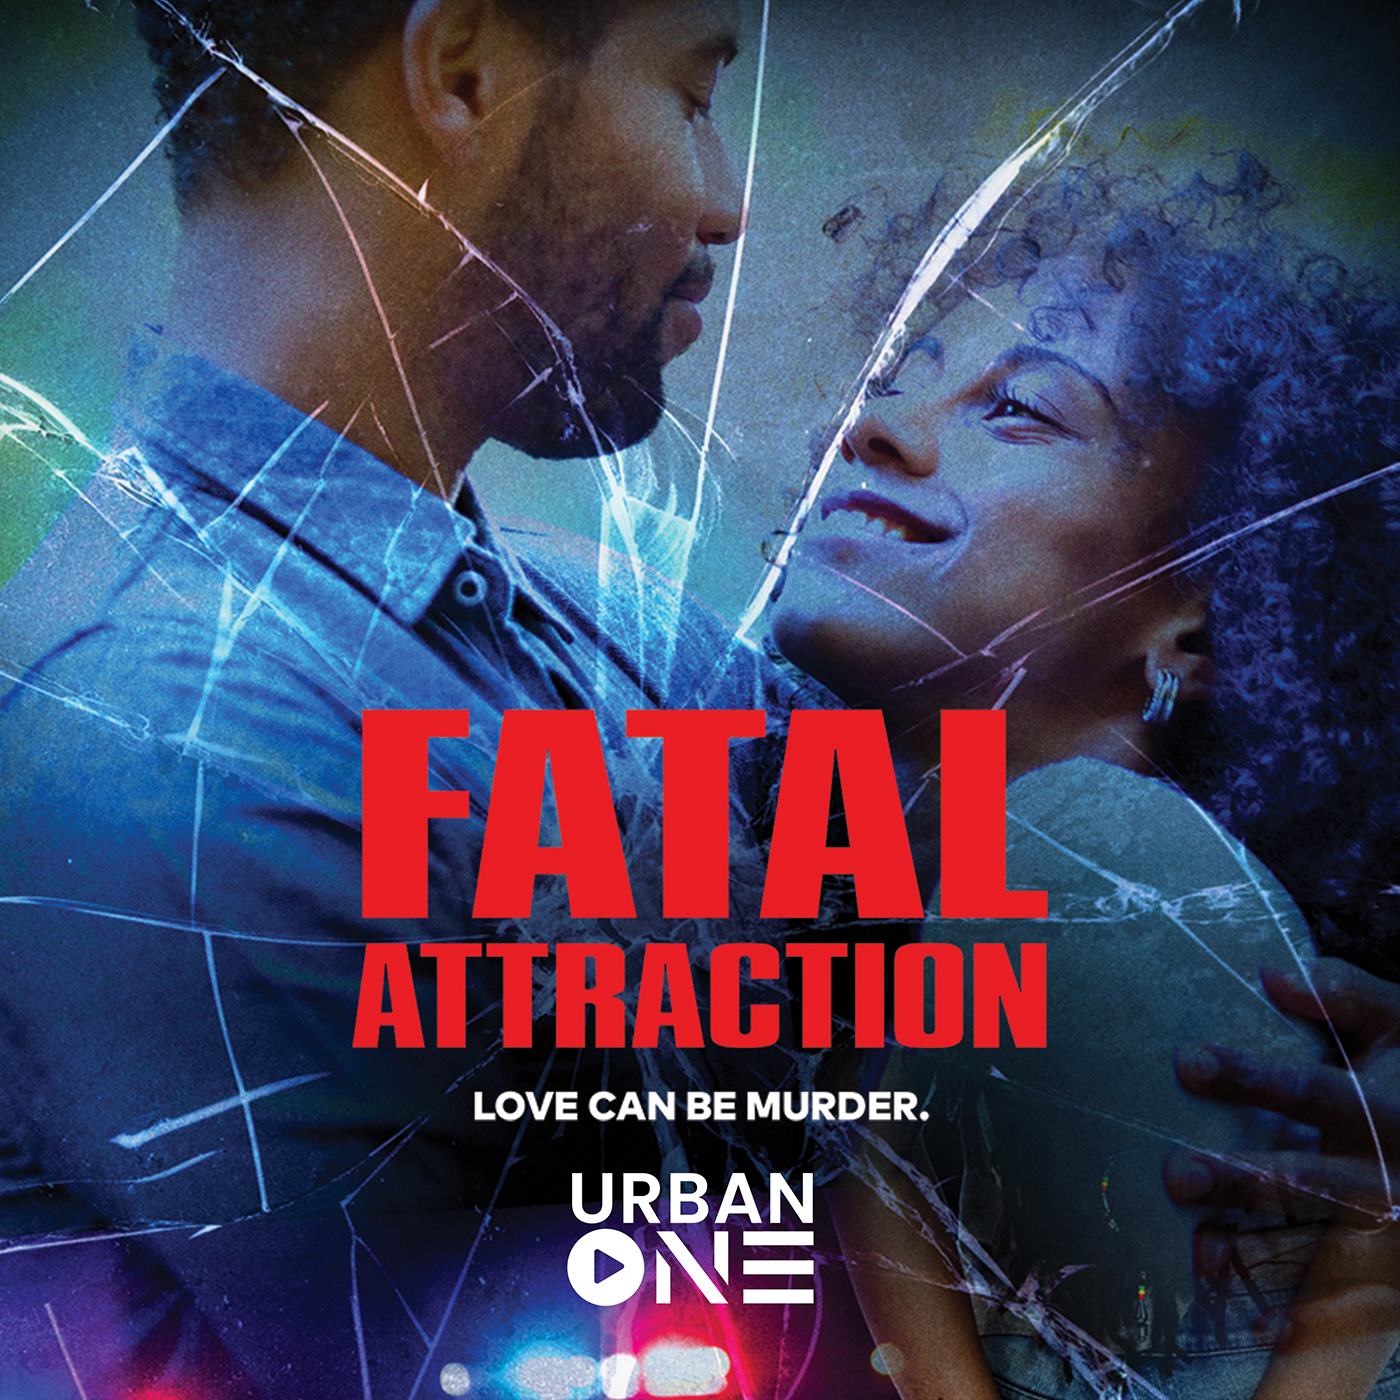 Fatal Attraction Season 2 Trailer